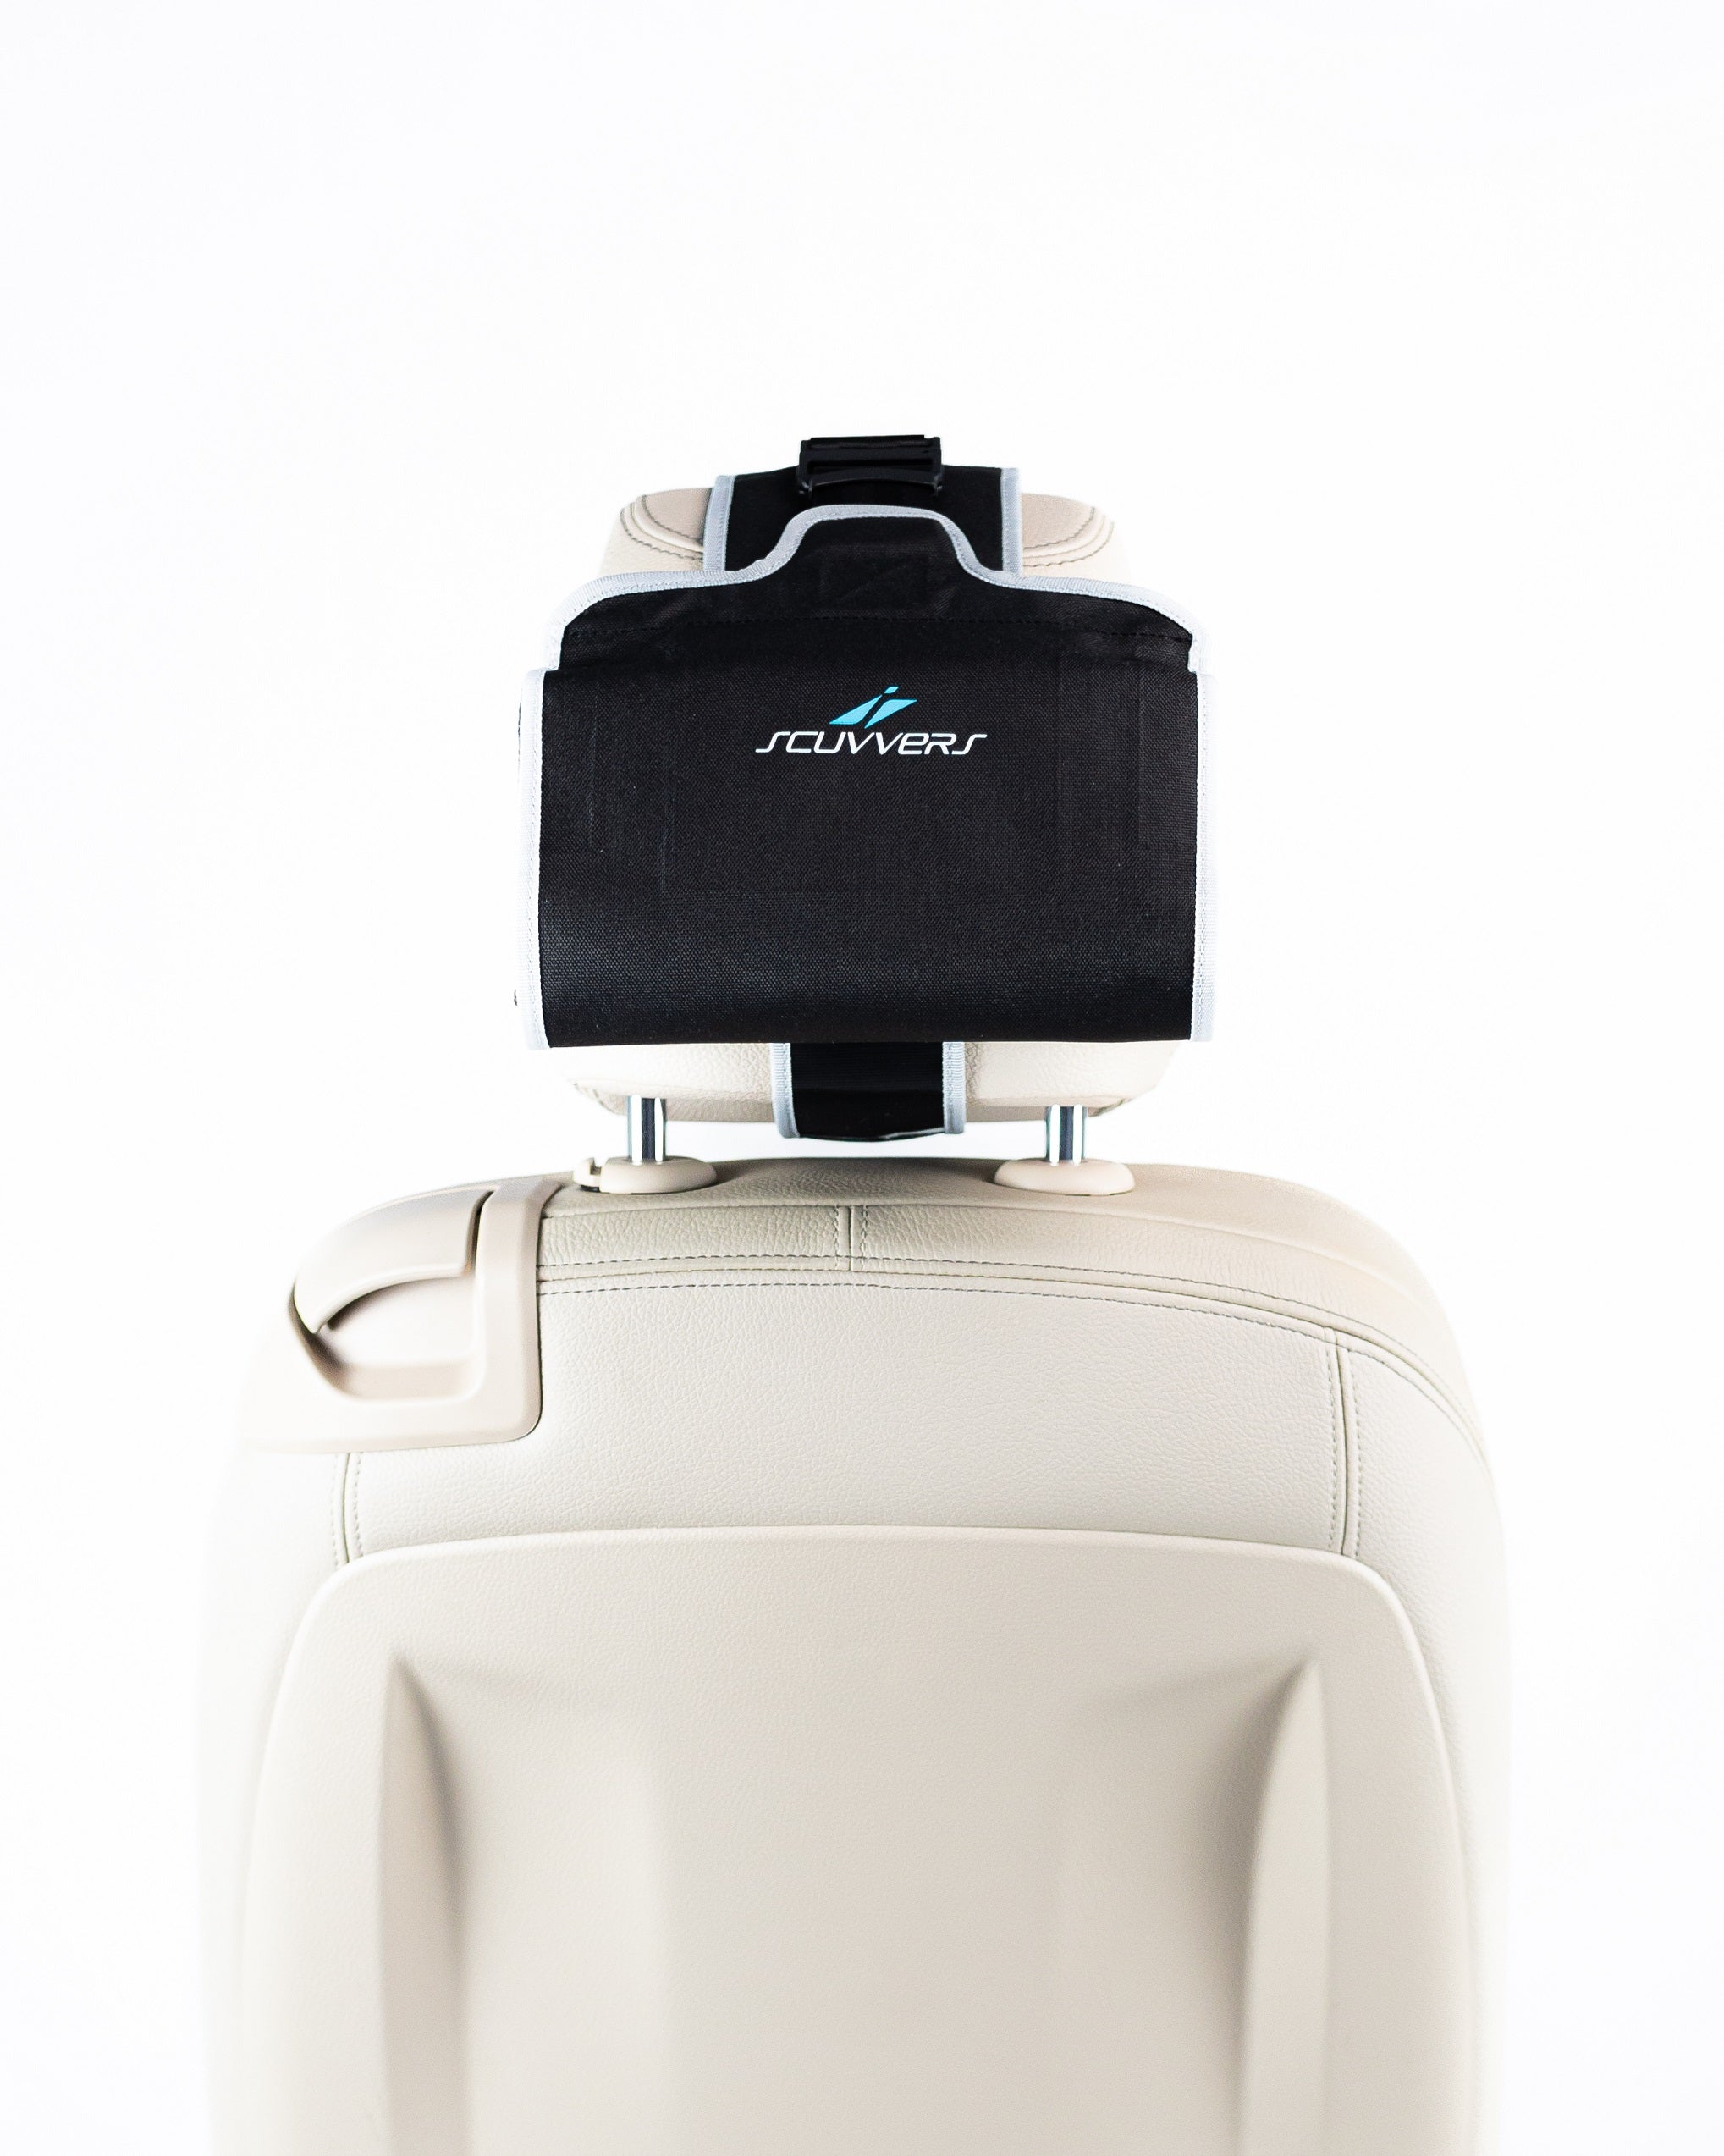 Scuvvers - Stowable car seat protectors. by Scuvvers — Kickstarter